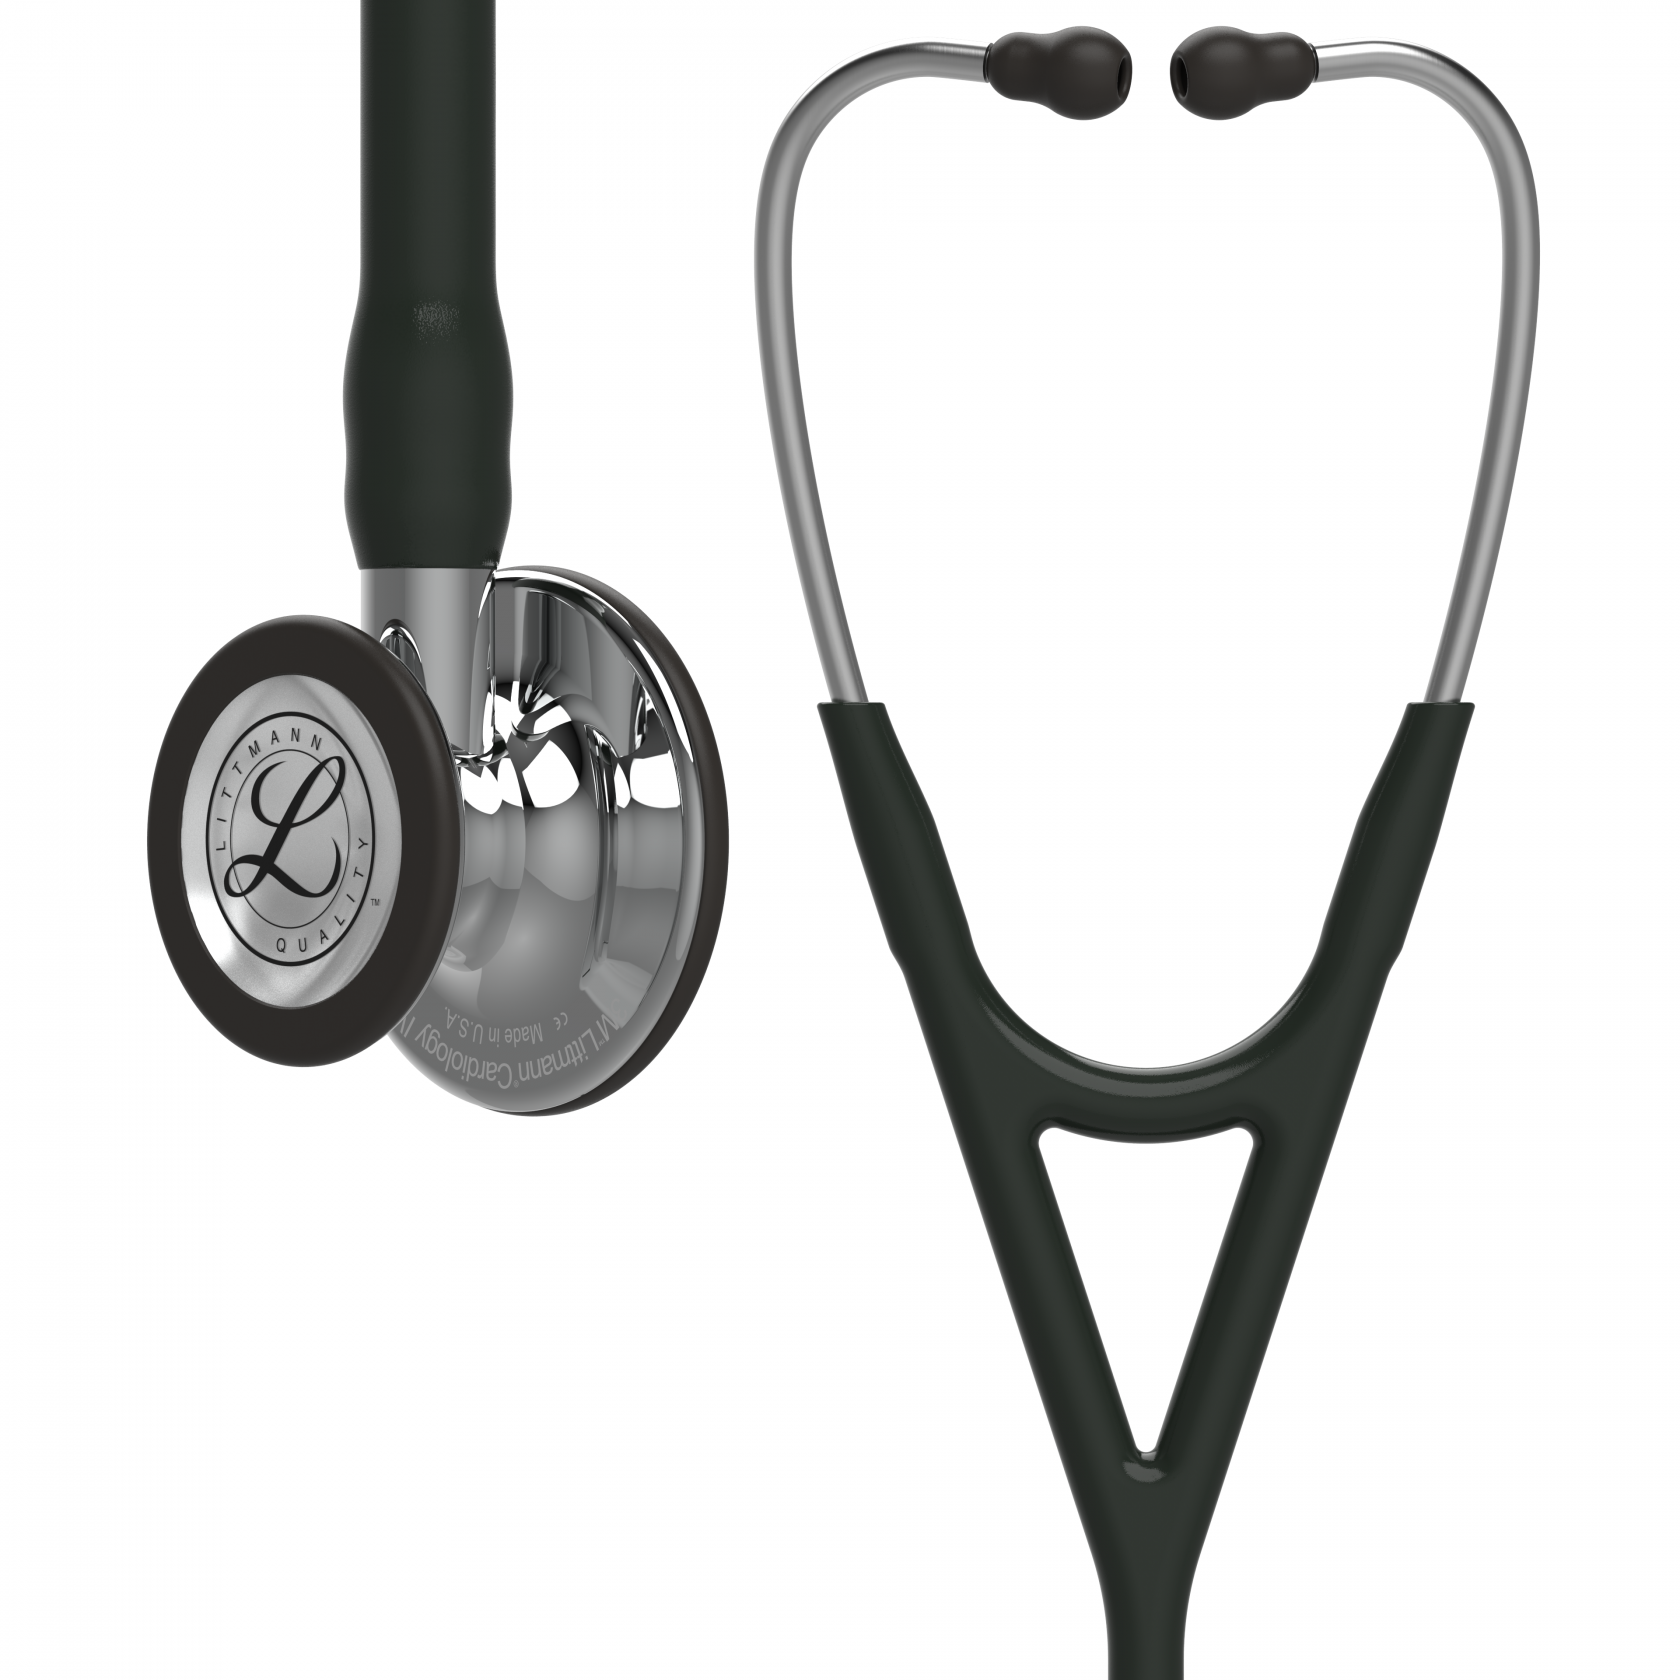 3M Stethoscope Littmann Cardiology IV Black with Mirror Finish image 1